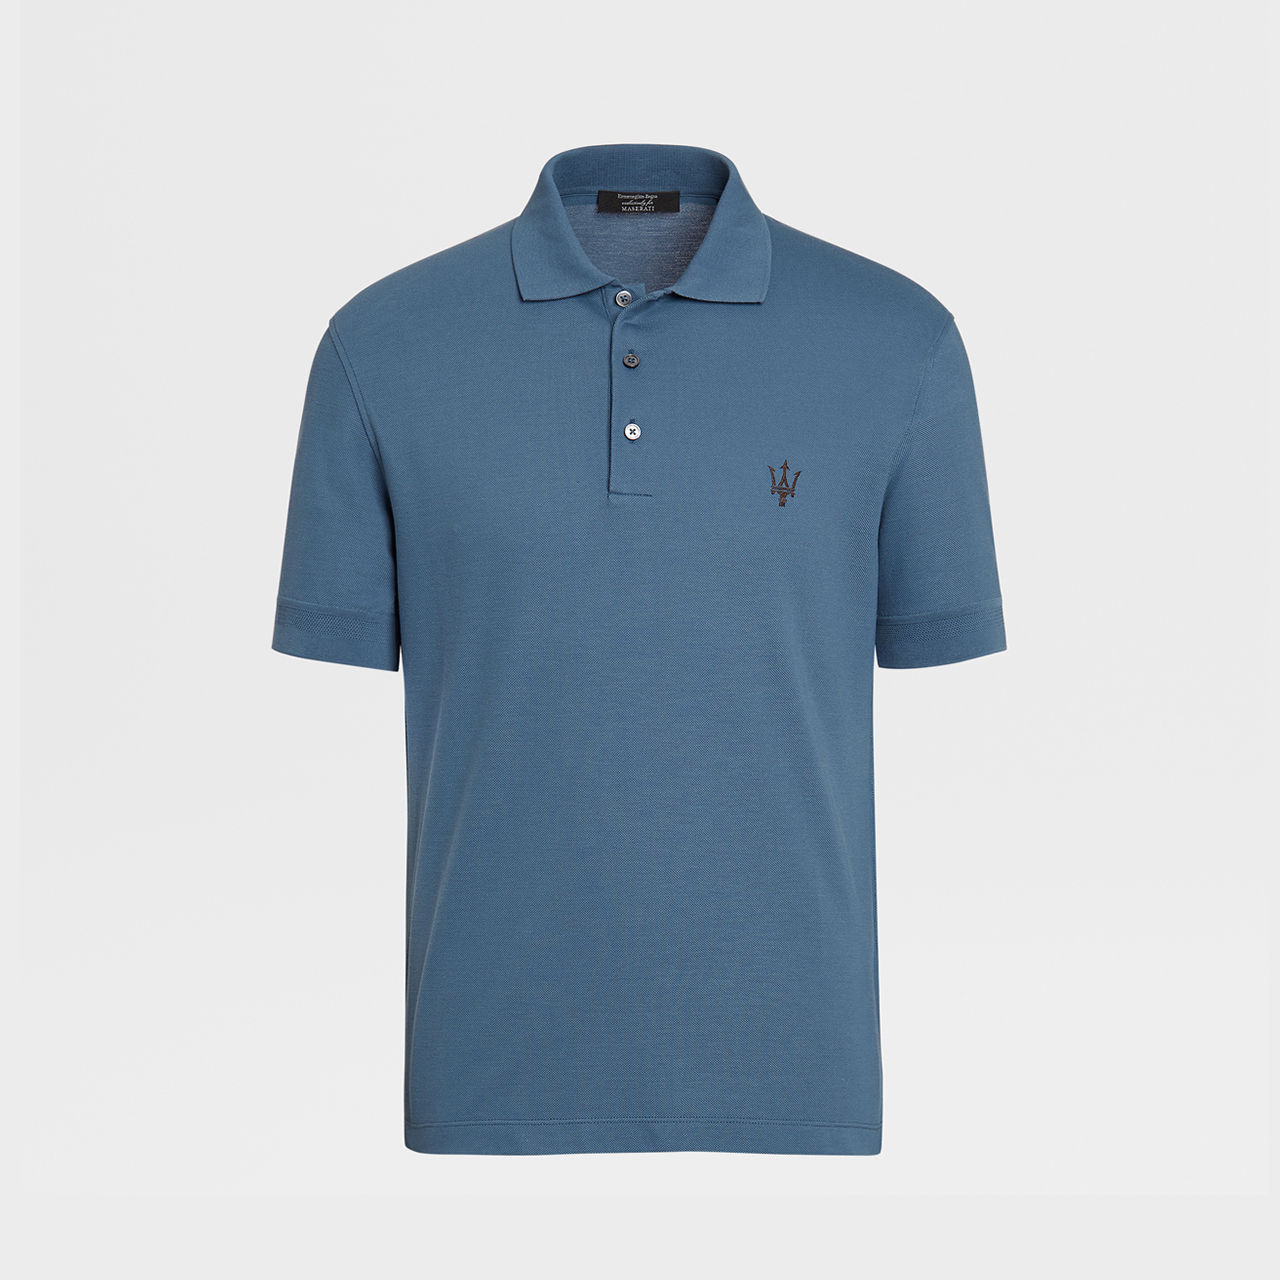 Tshirt Polo Maserati Blu chiaro con tridente